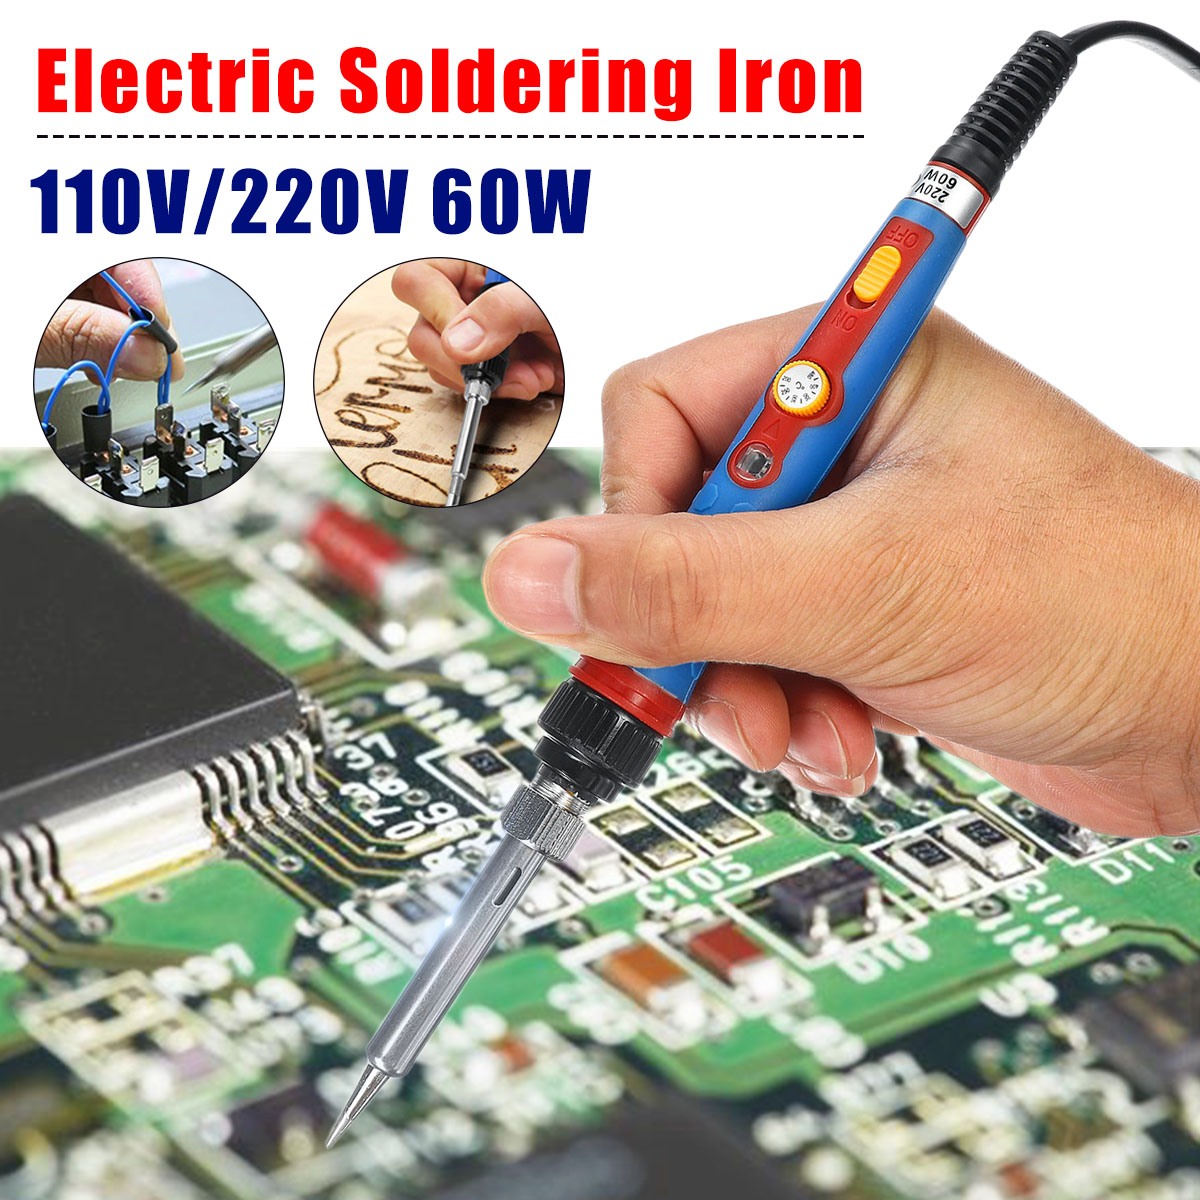 110220V-Electric-Soldering-Iron-Adjustable-Temperature-60W-Welding-Set-Tool-1707459-1